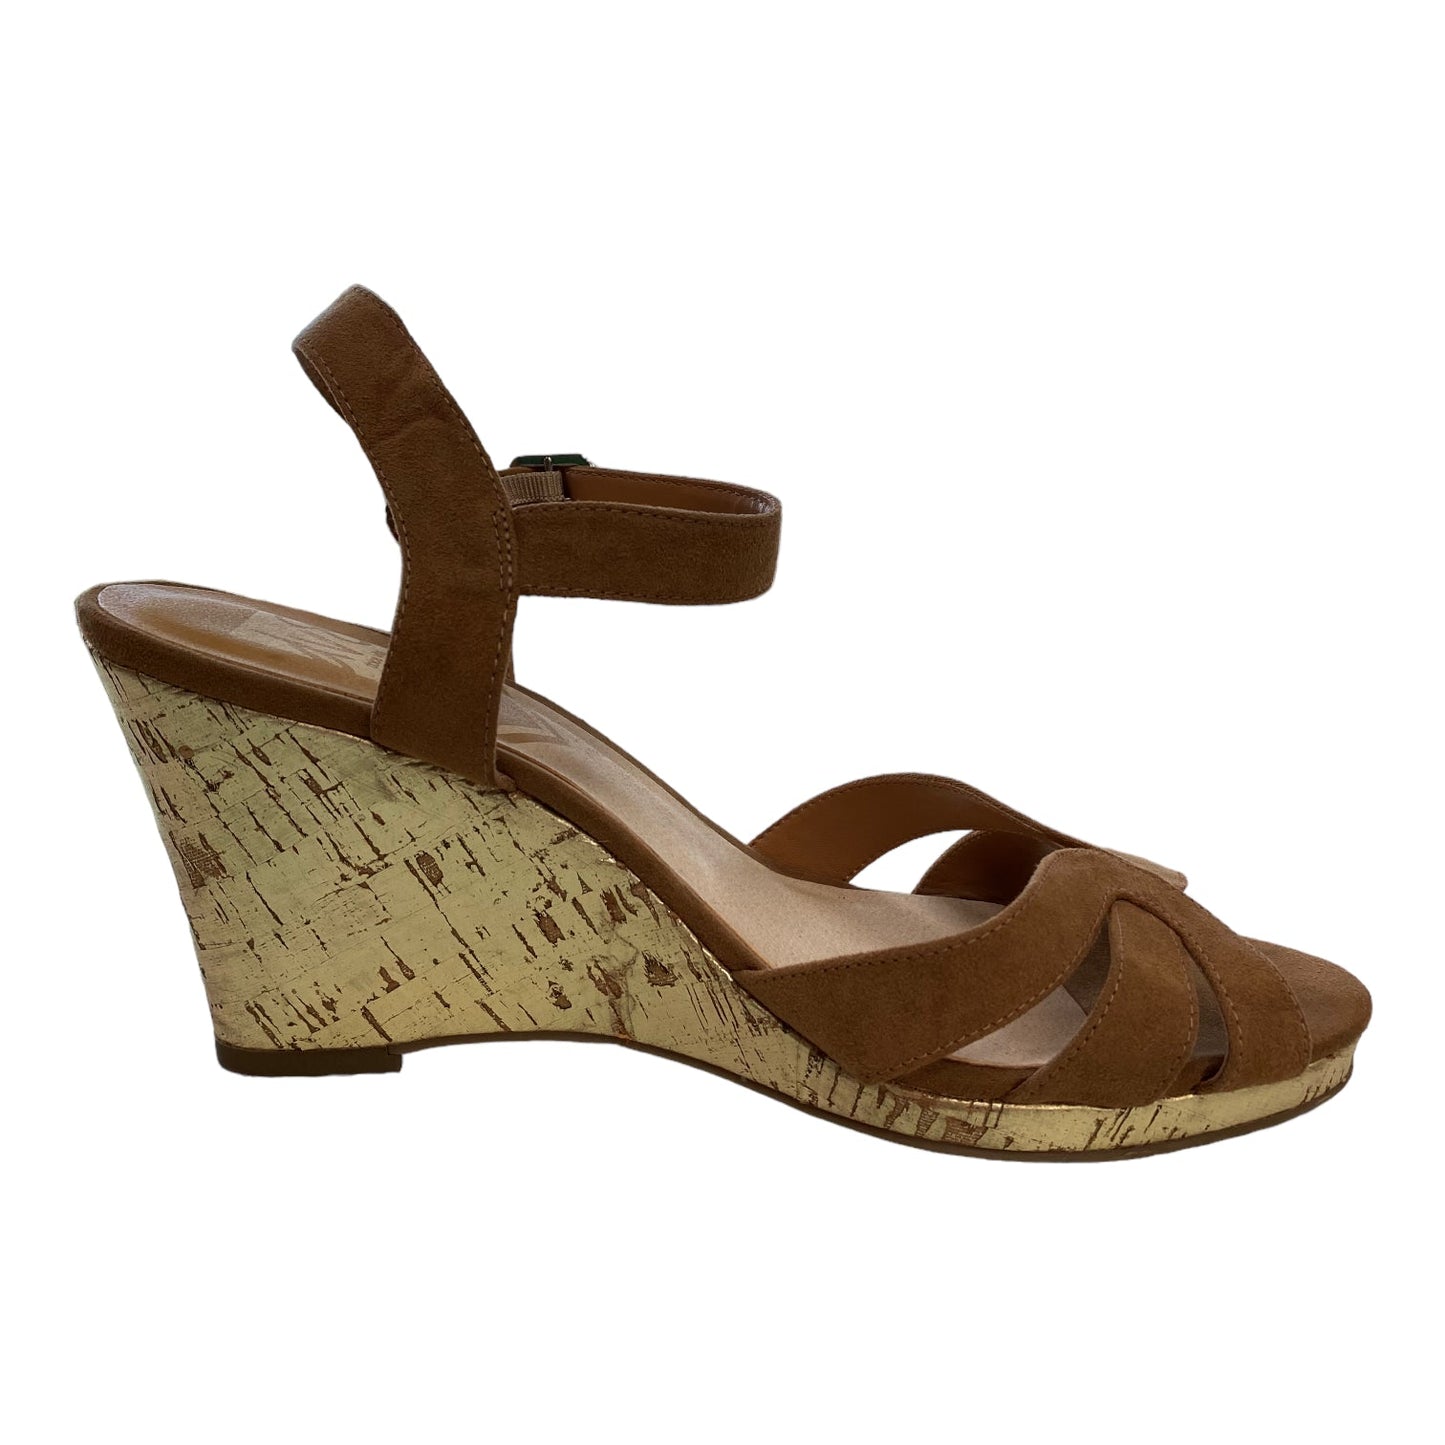 Brown Sandals Heels Wedge Dolce Vita, Size 8.5